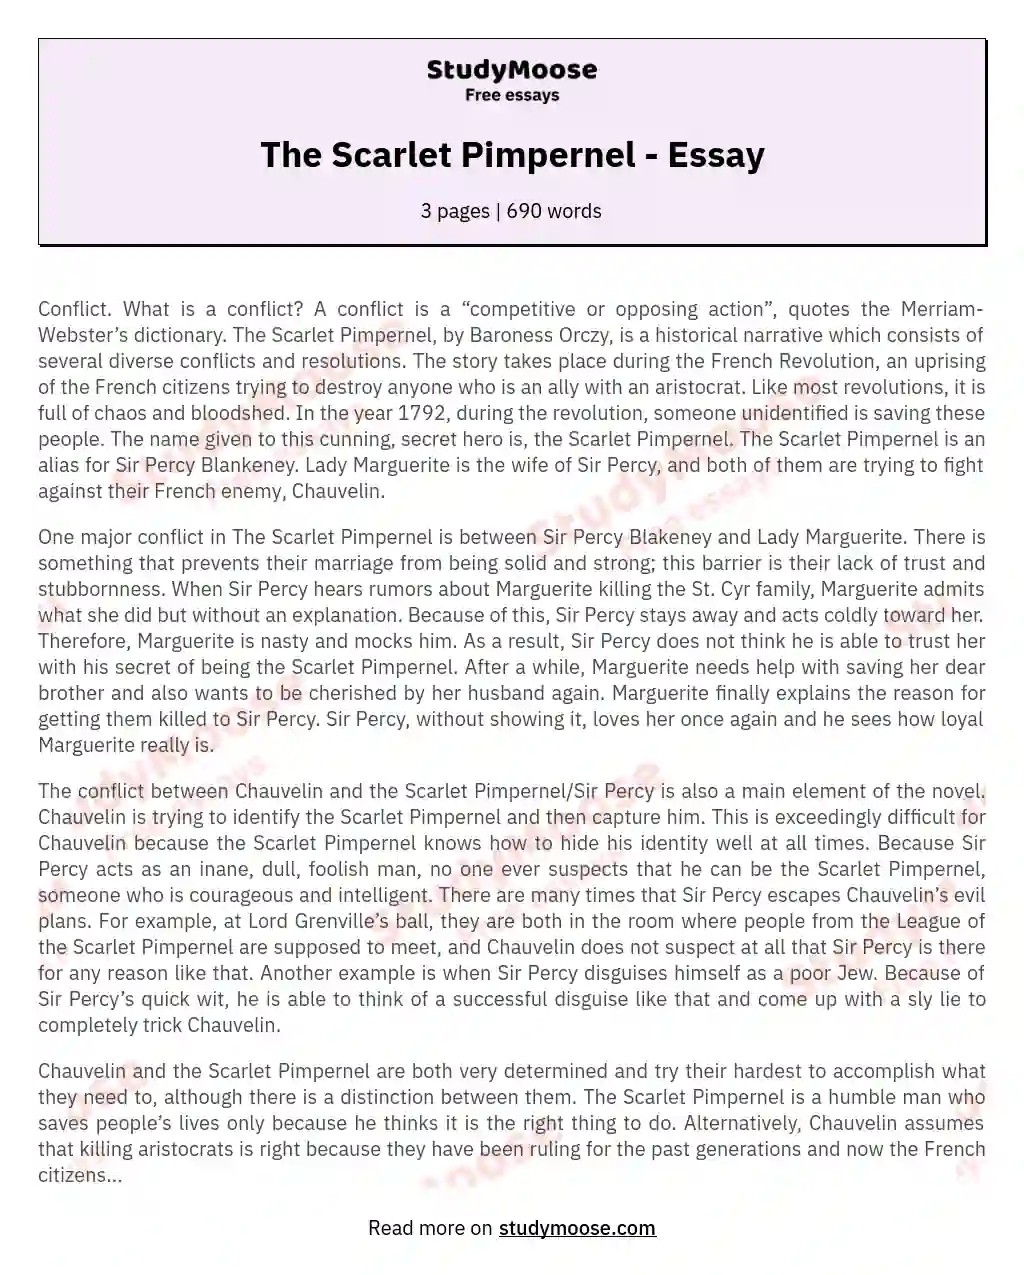 The Scarlet Pimpernel - Essay essay